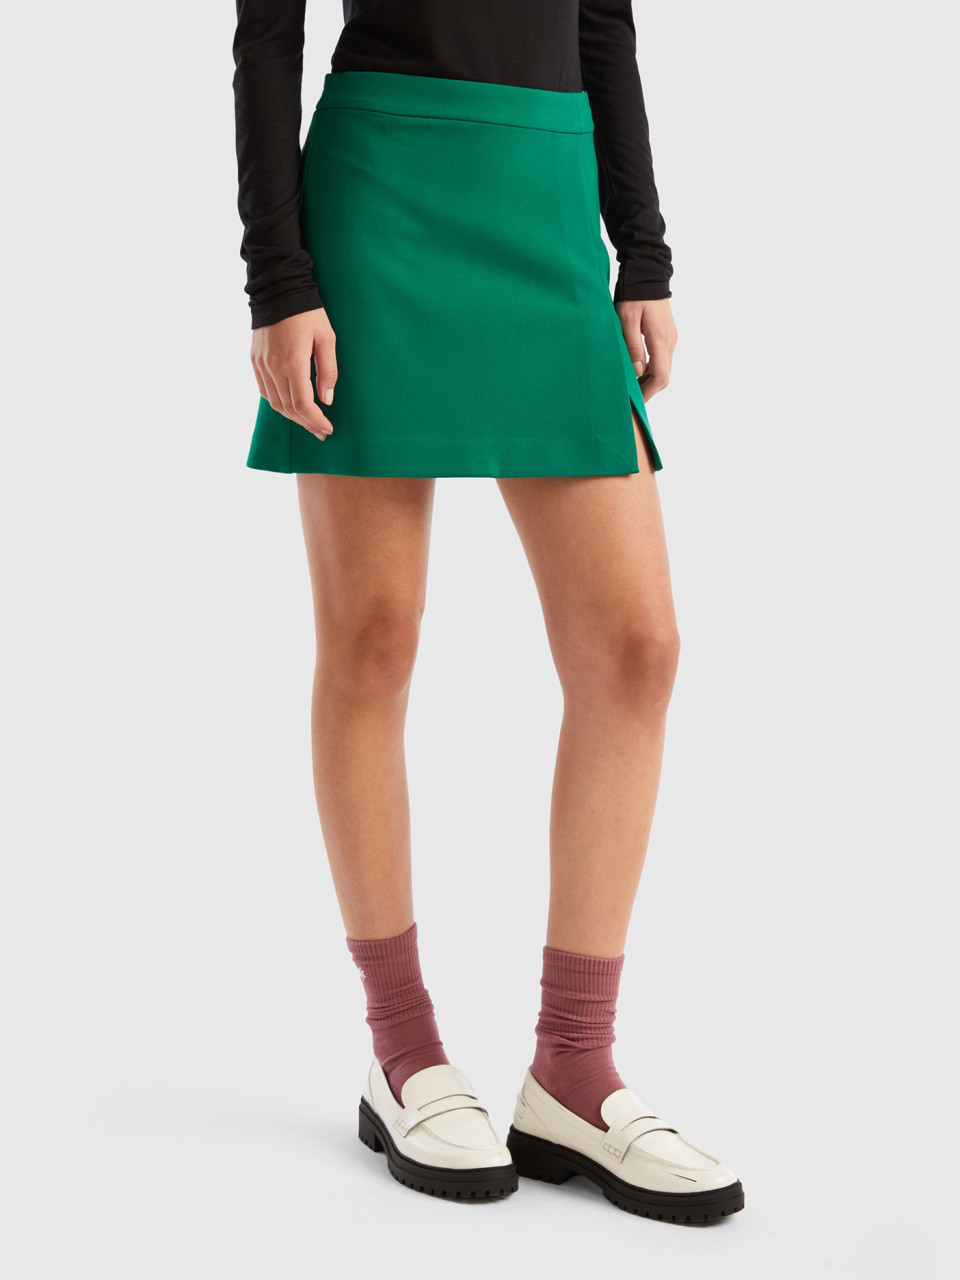 Benetton, Mini Skirt With Side Zipper, Green, Women